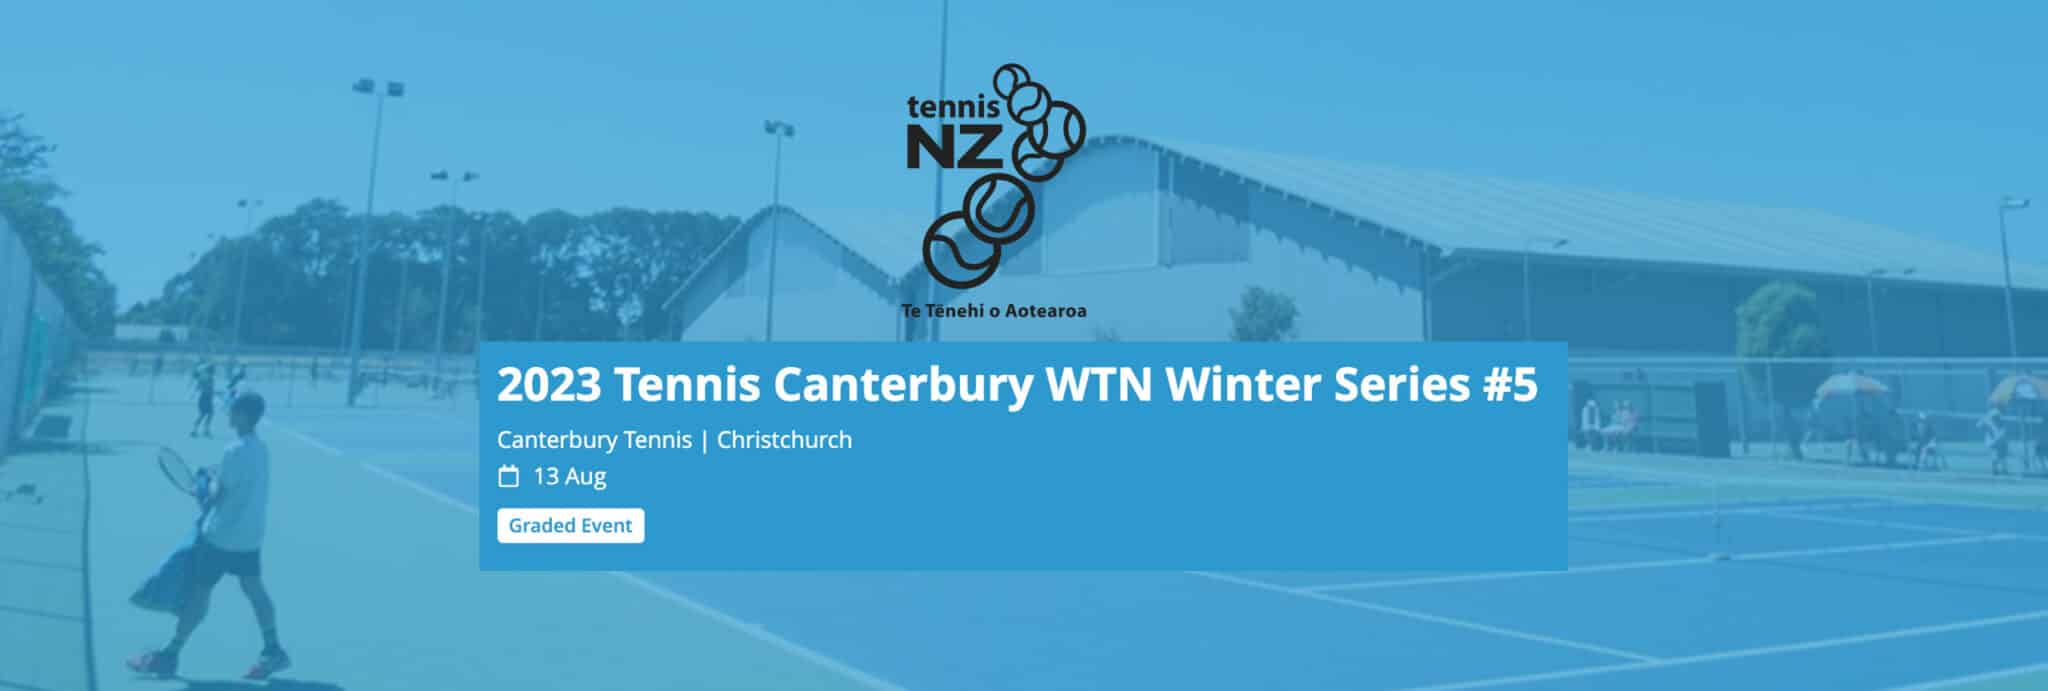 2023 Tennis Canterbury WTN Winter Series #5